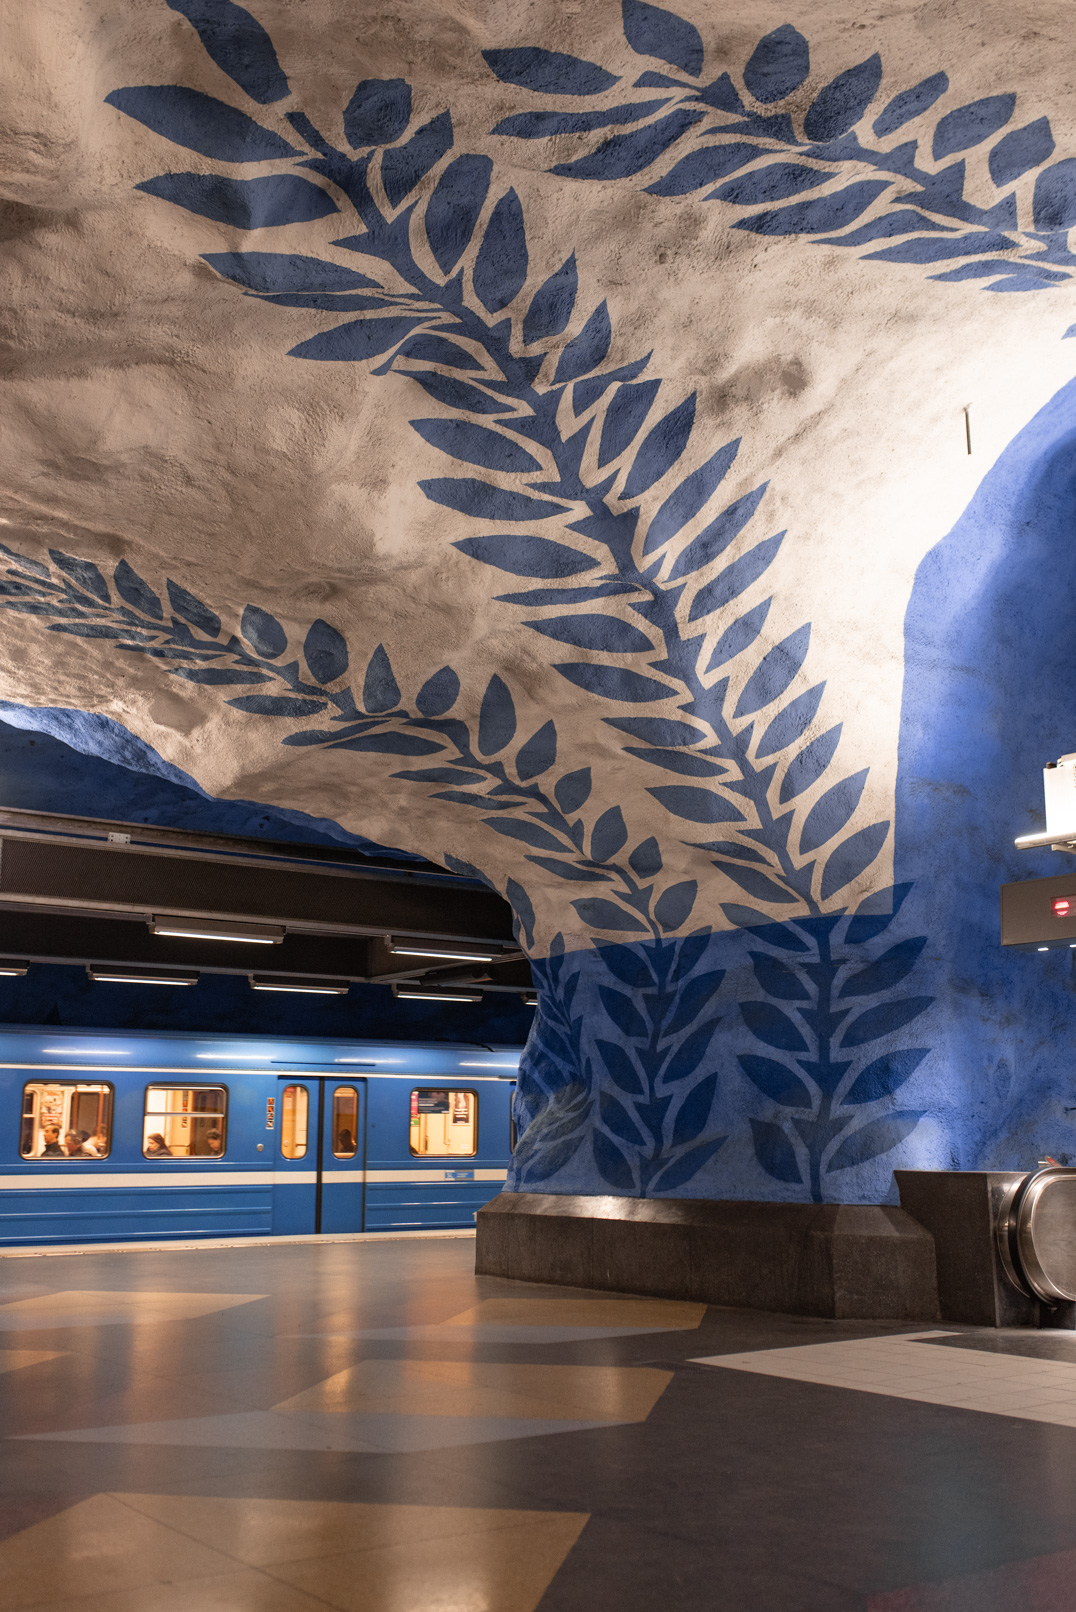 Stockholm's Metro System